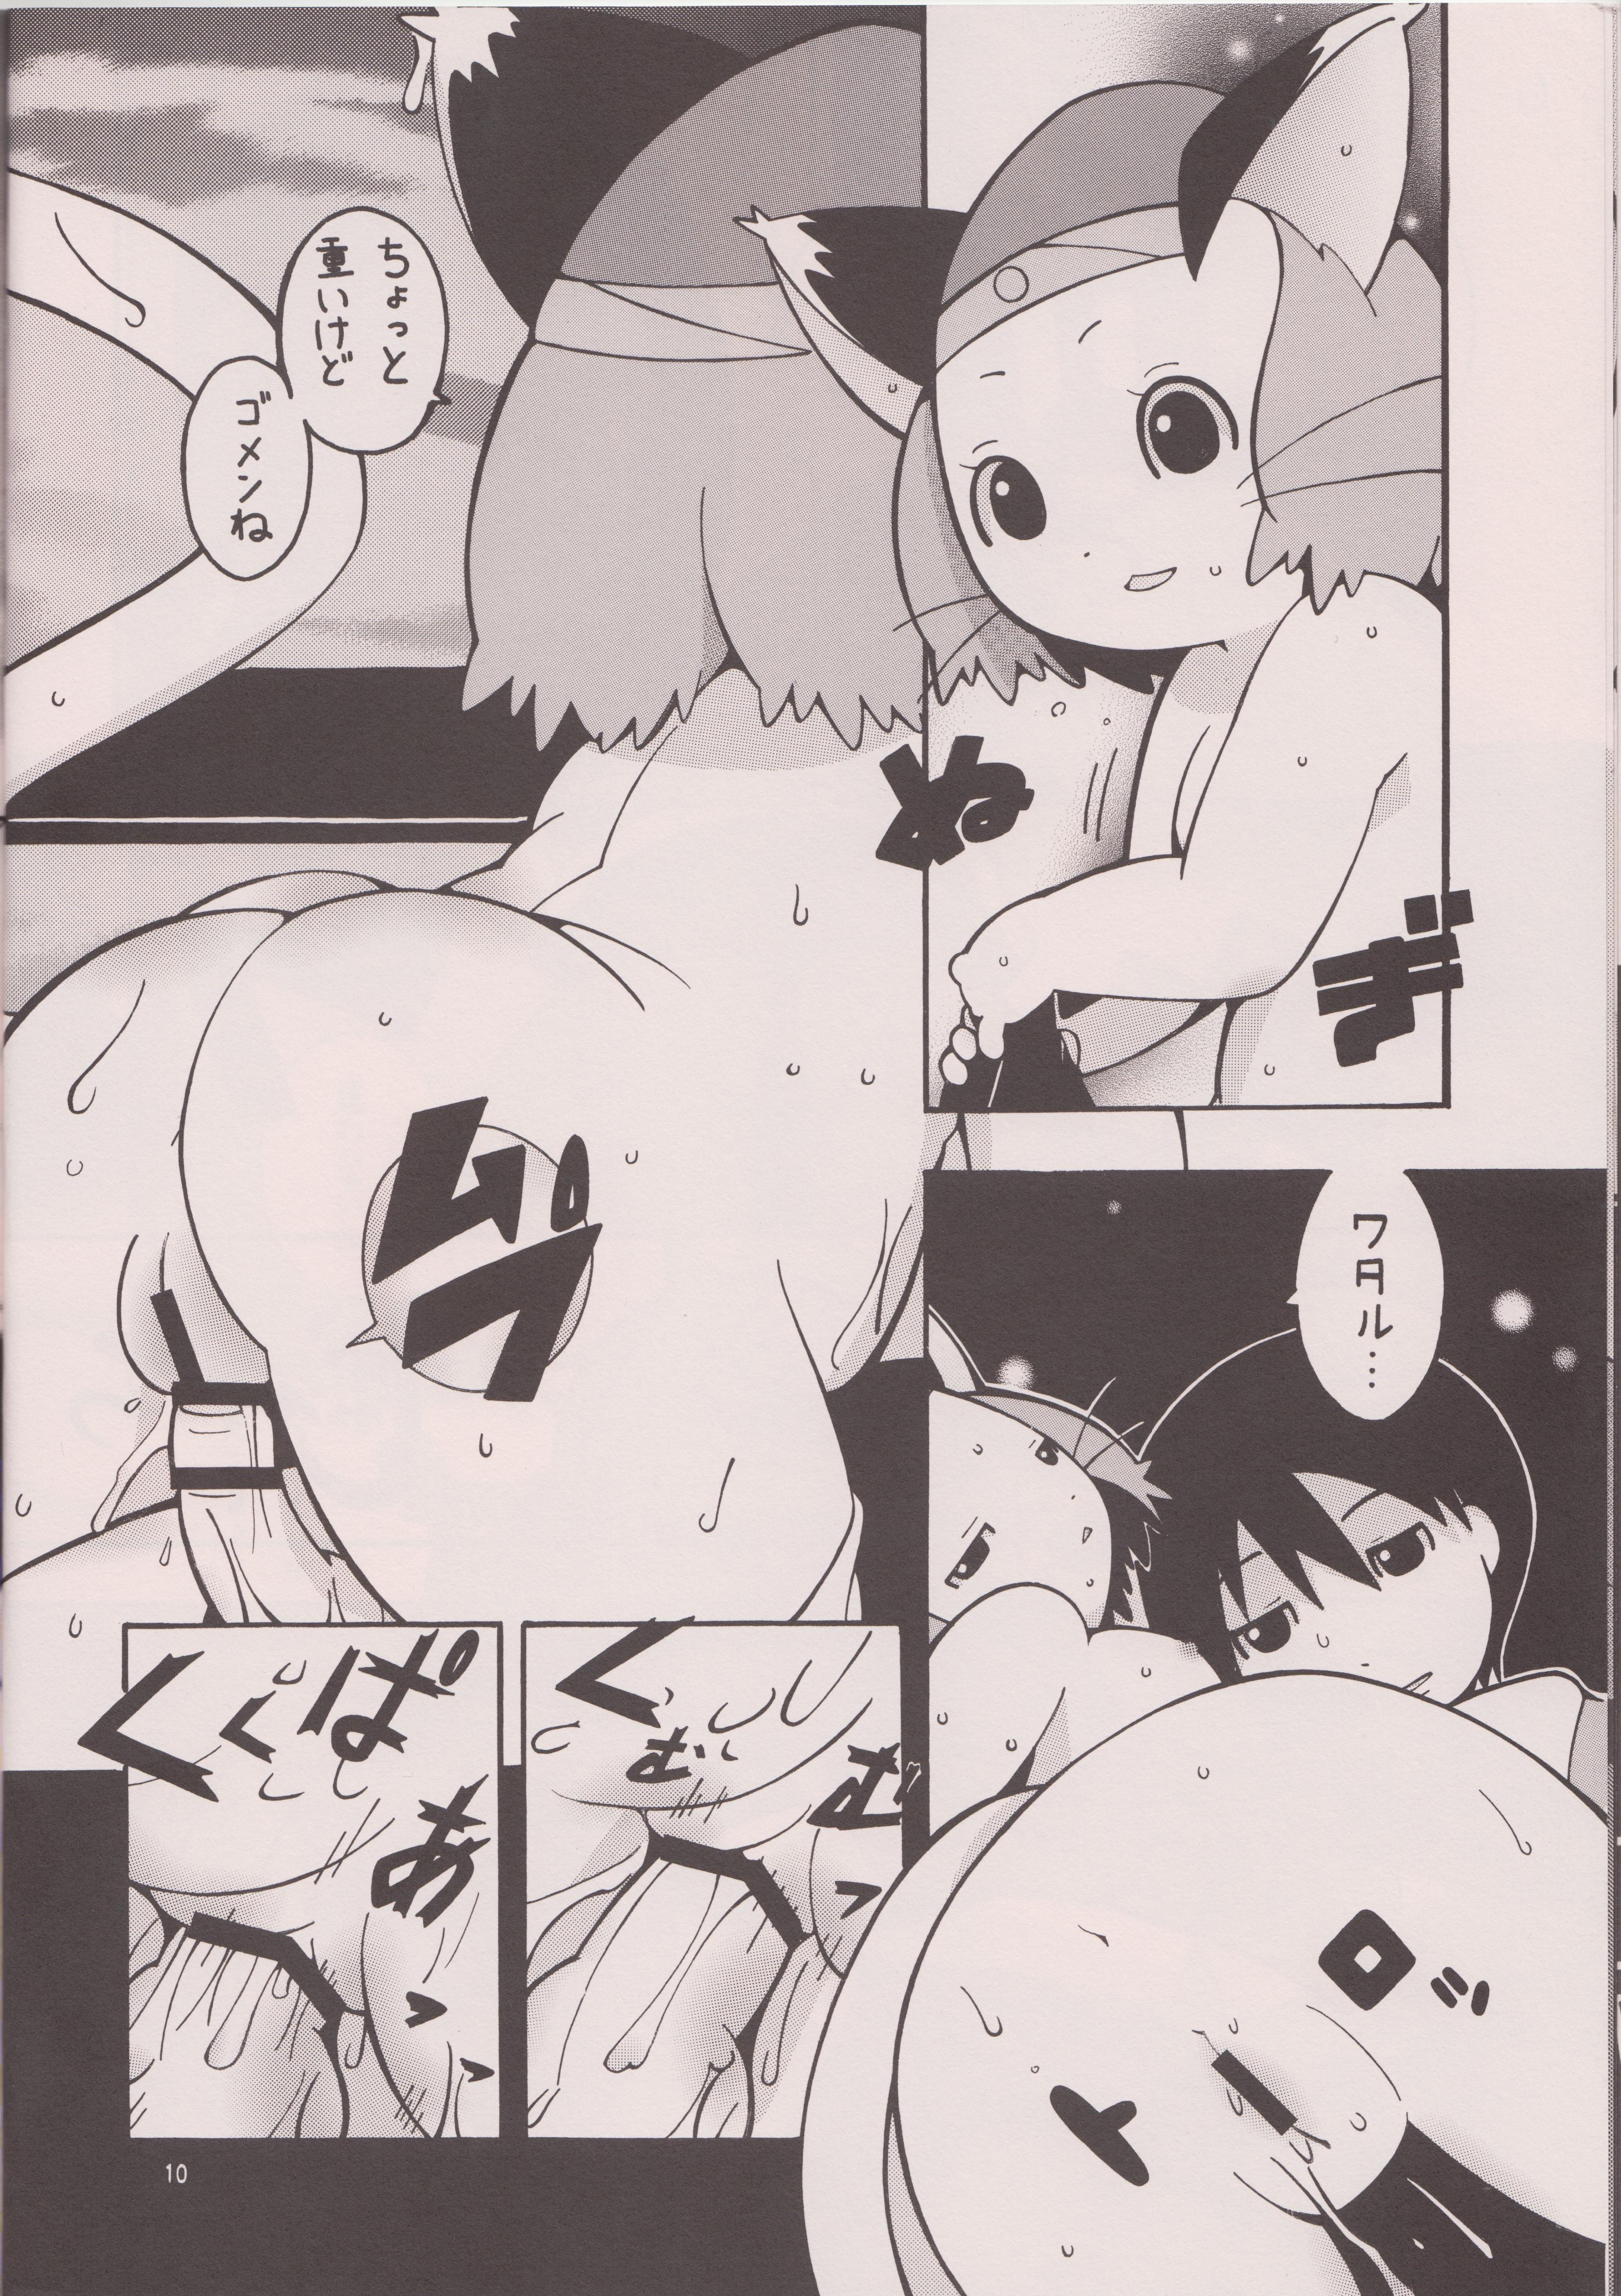 This Mochimochi. Mochimochimochi. - Brave story Strip - Page 9